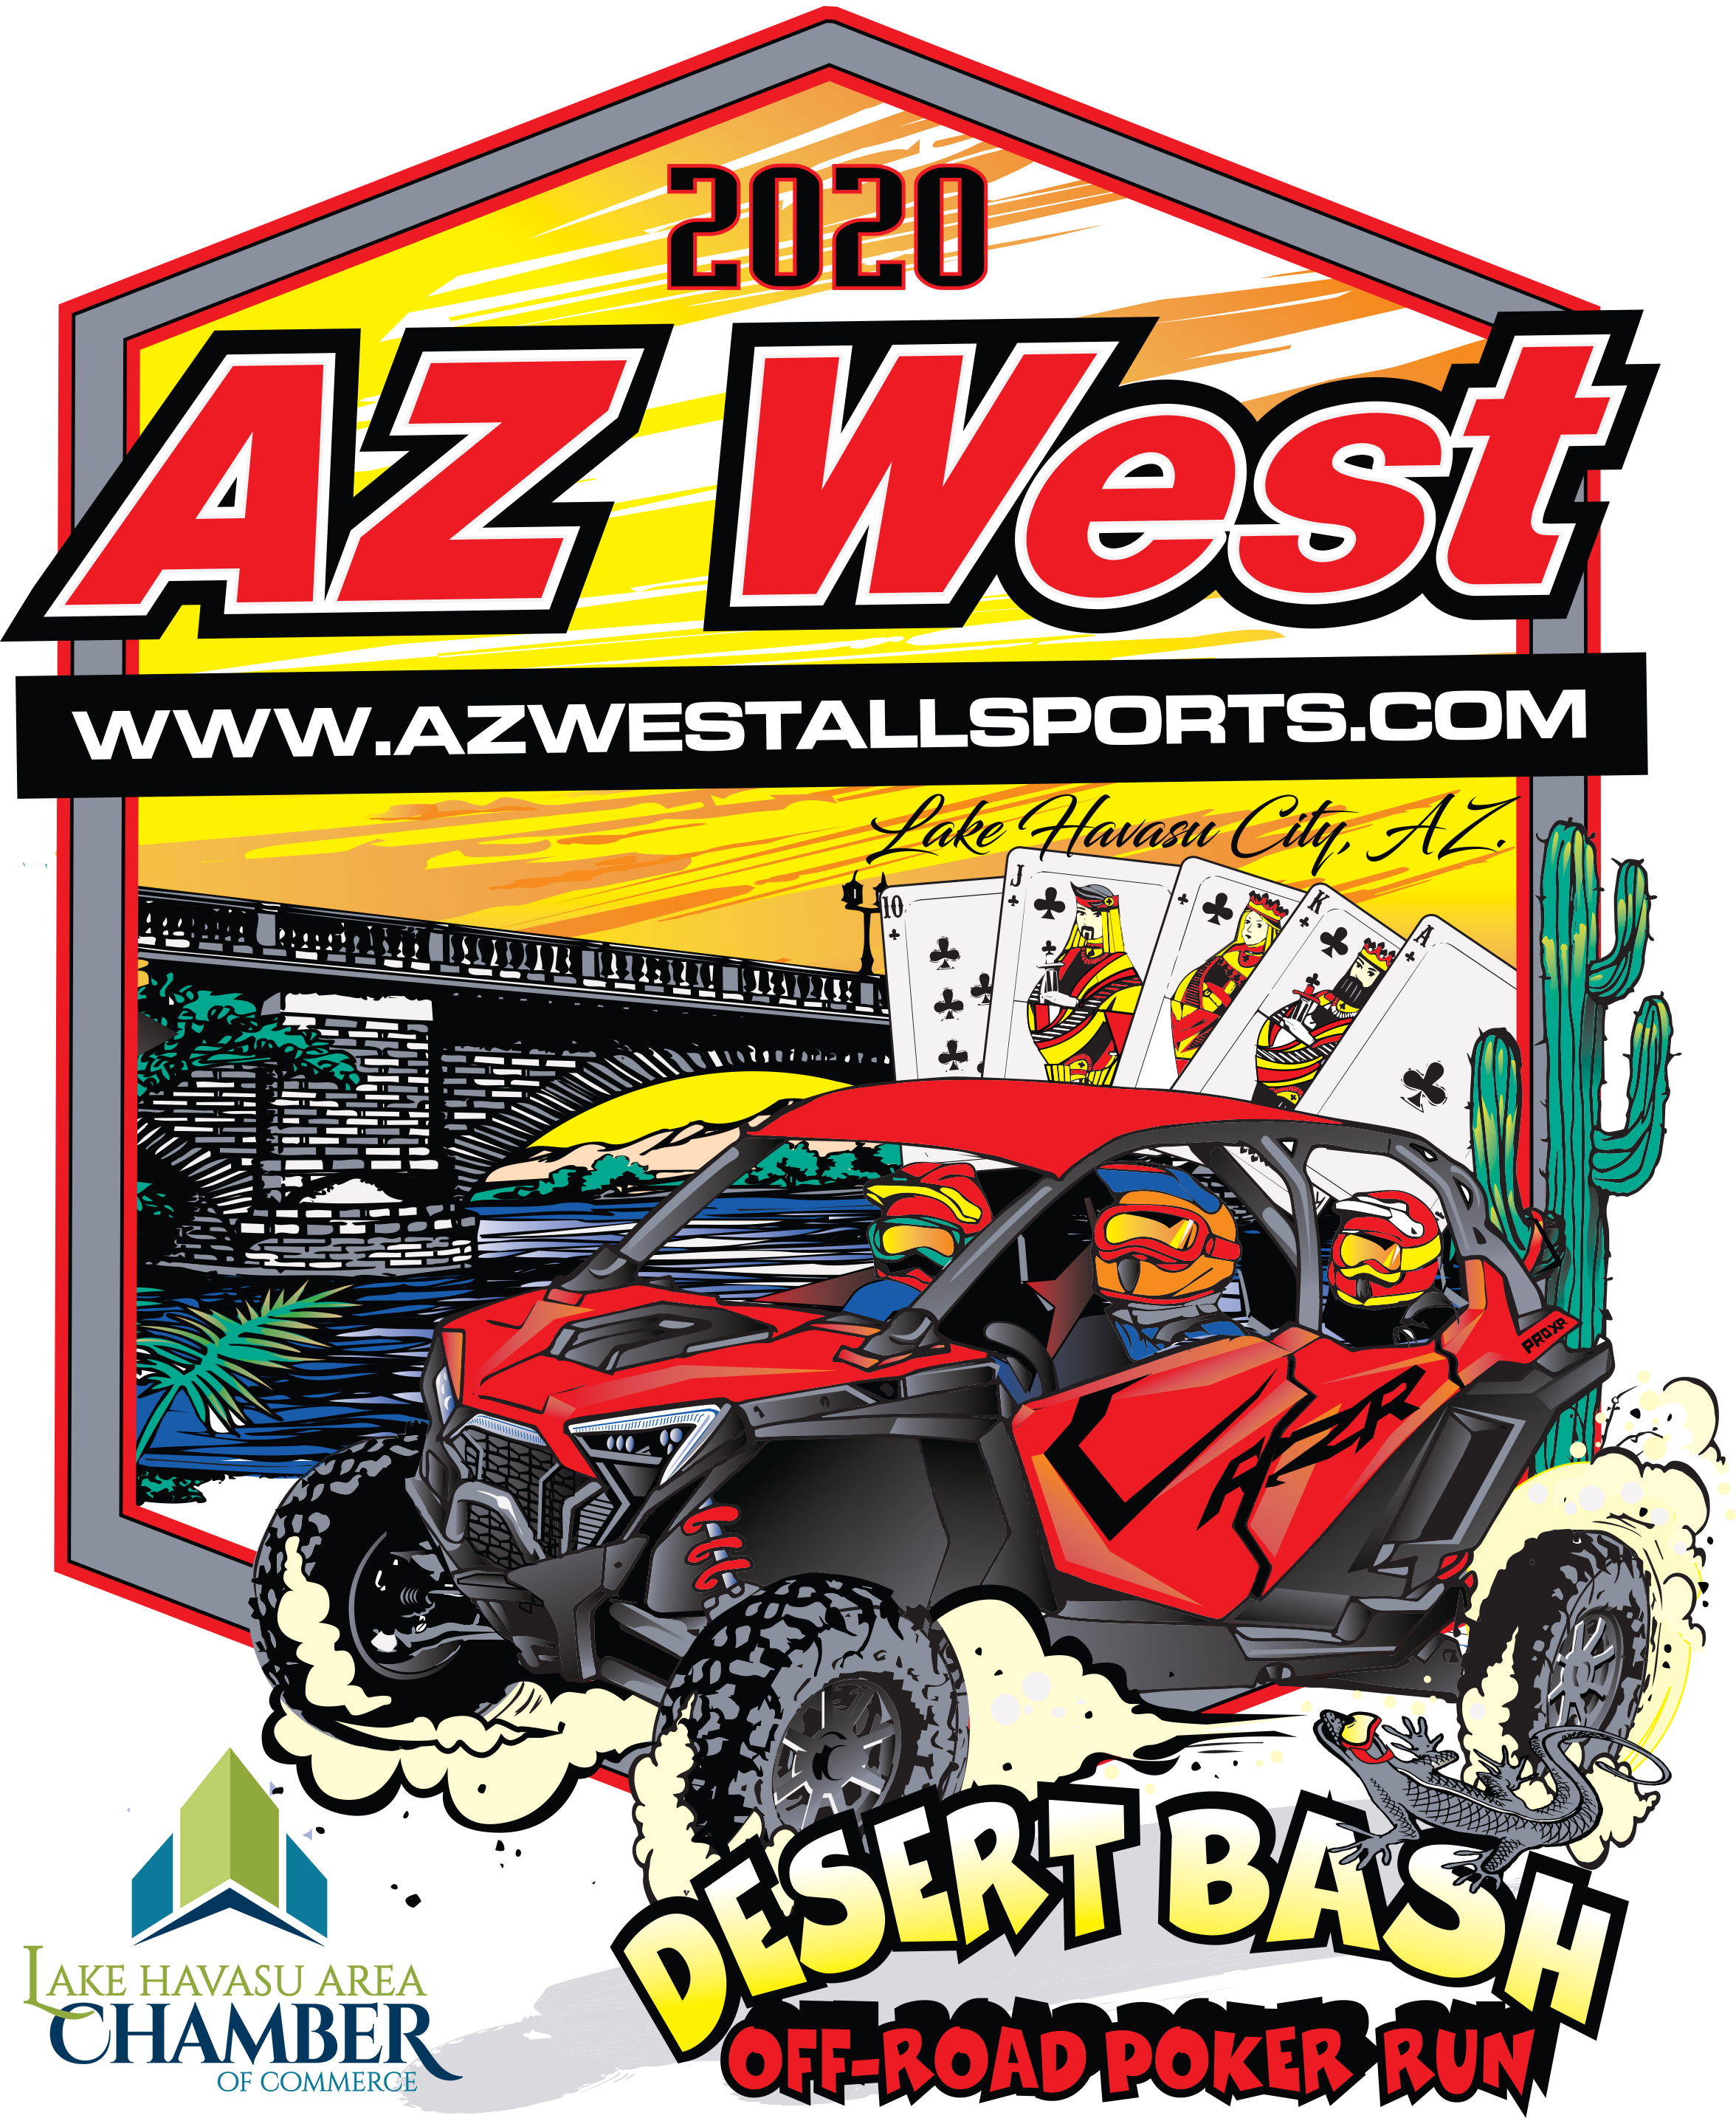 AZ West Presents Desert Bash and Off Road Poker Run Lake Havasu City